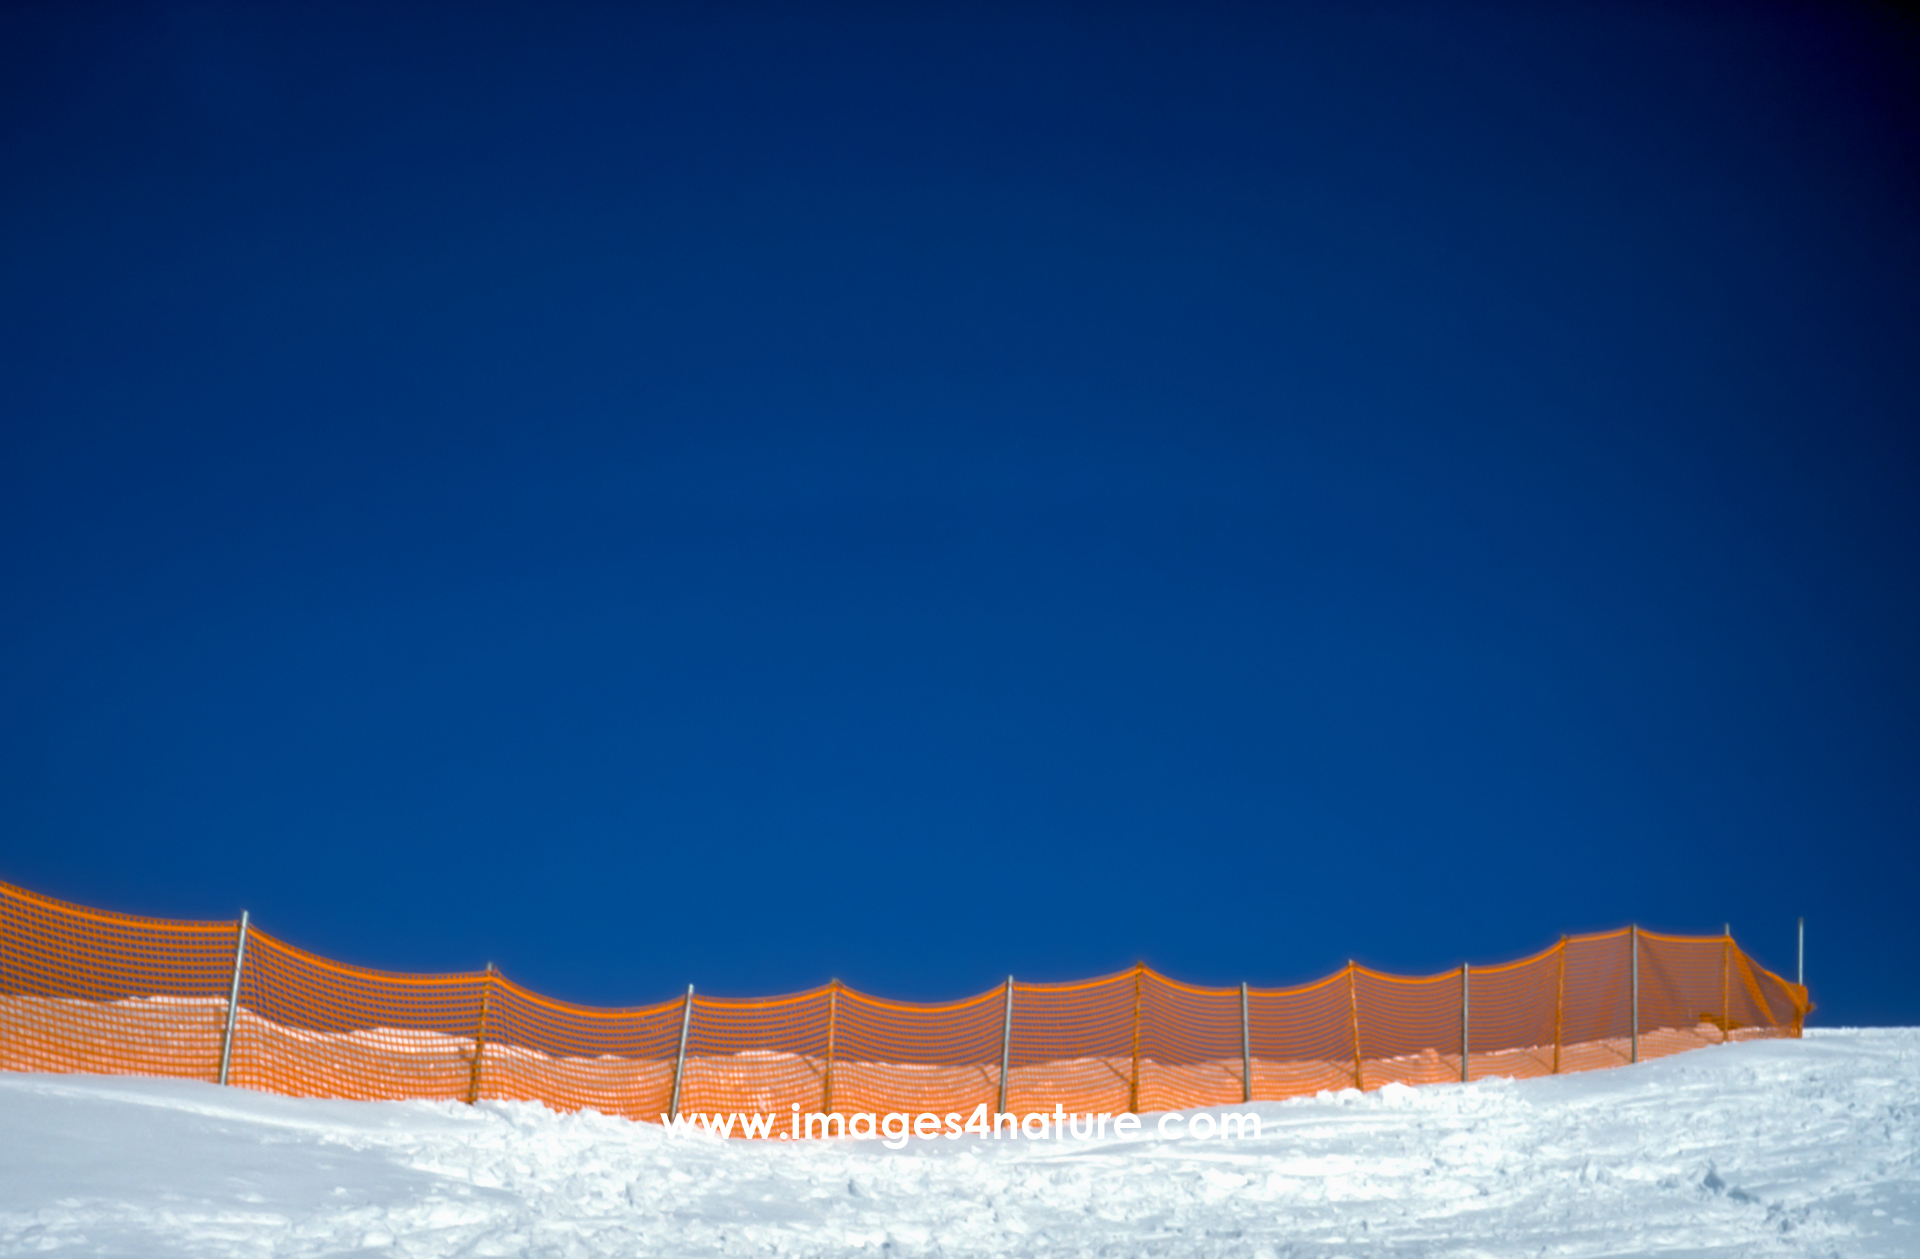 Orange plastic fence in the snow against dark blue sky